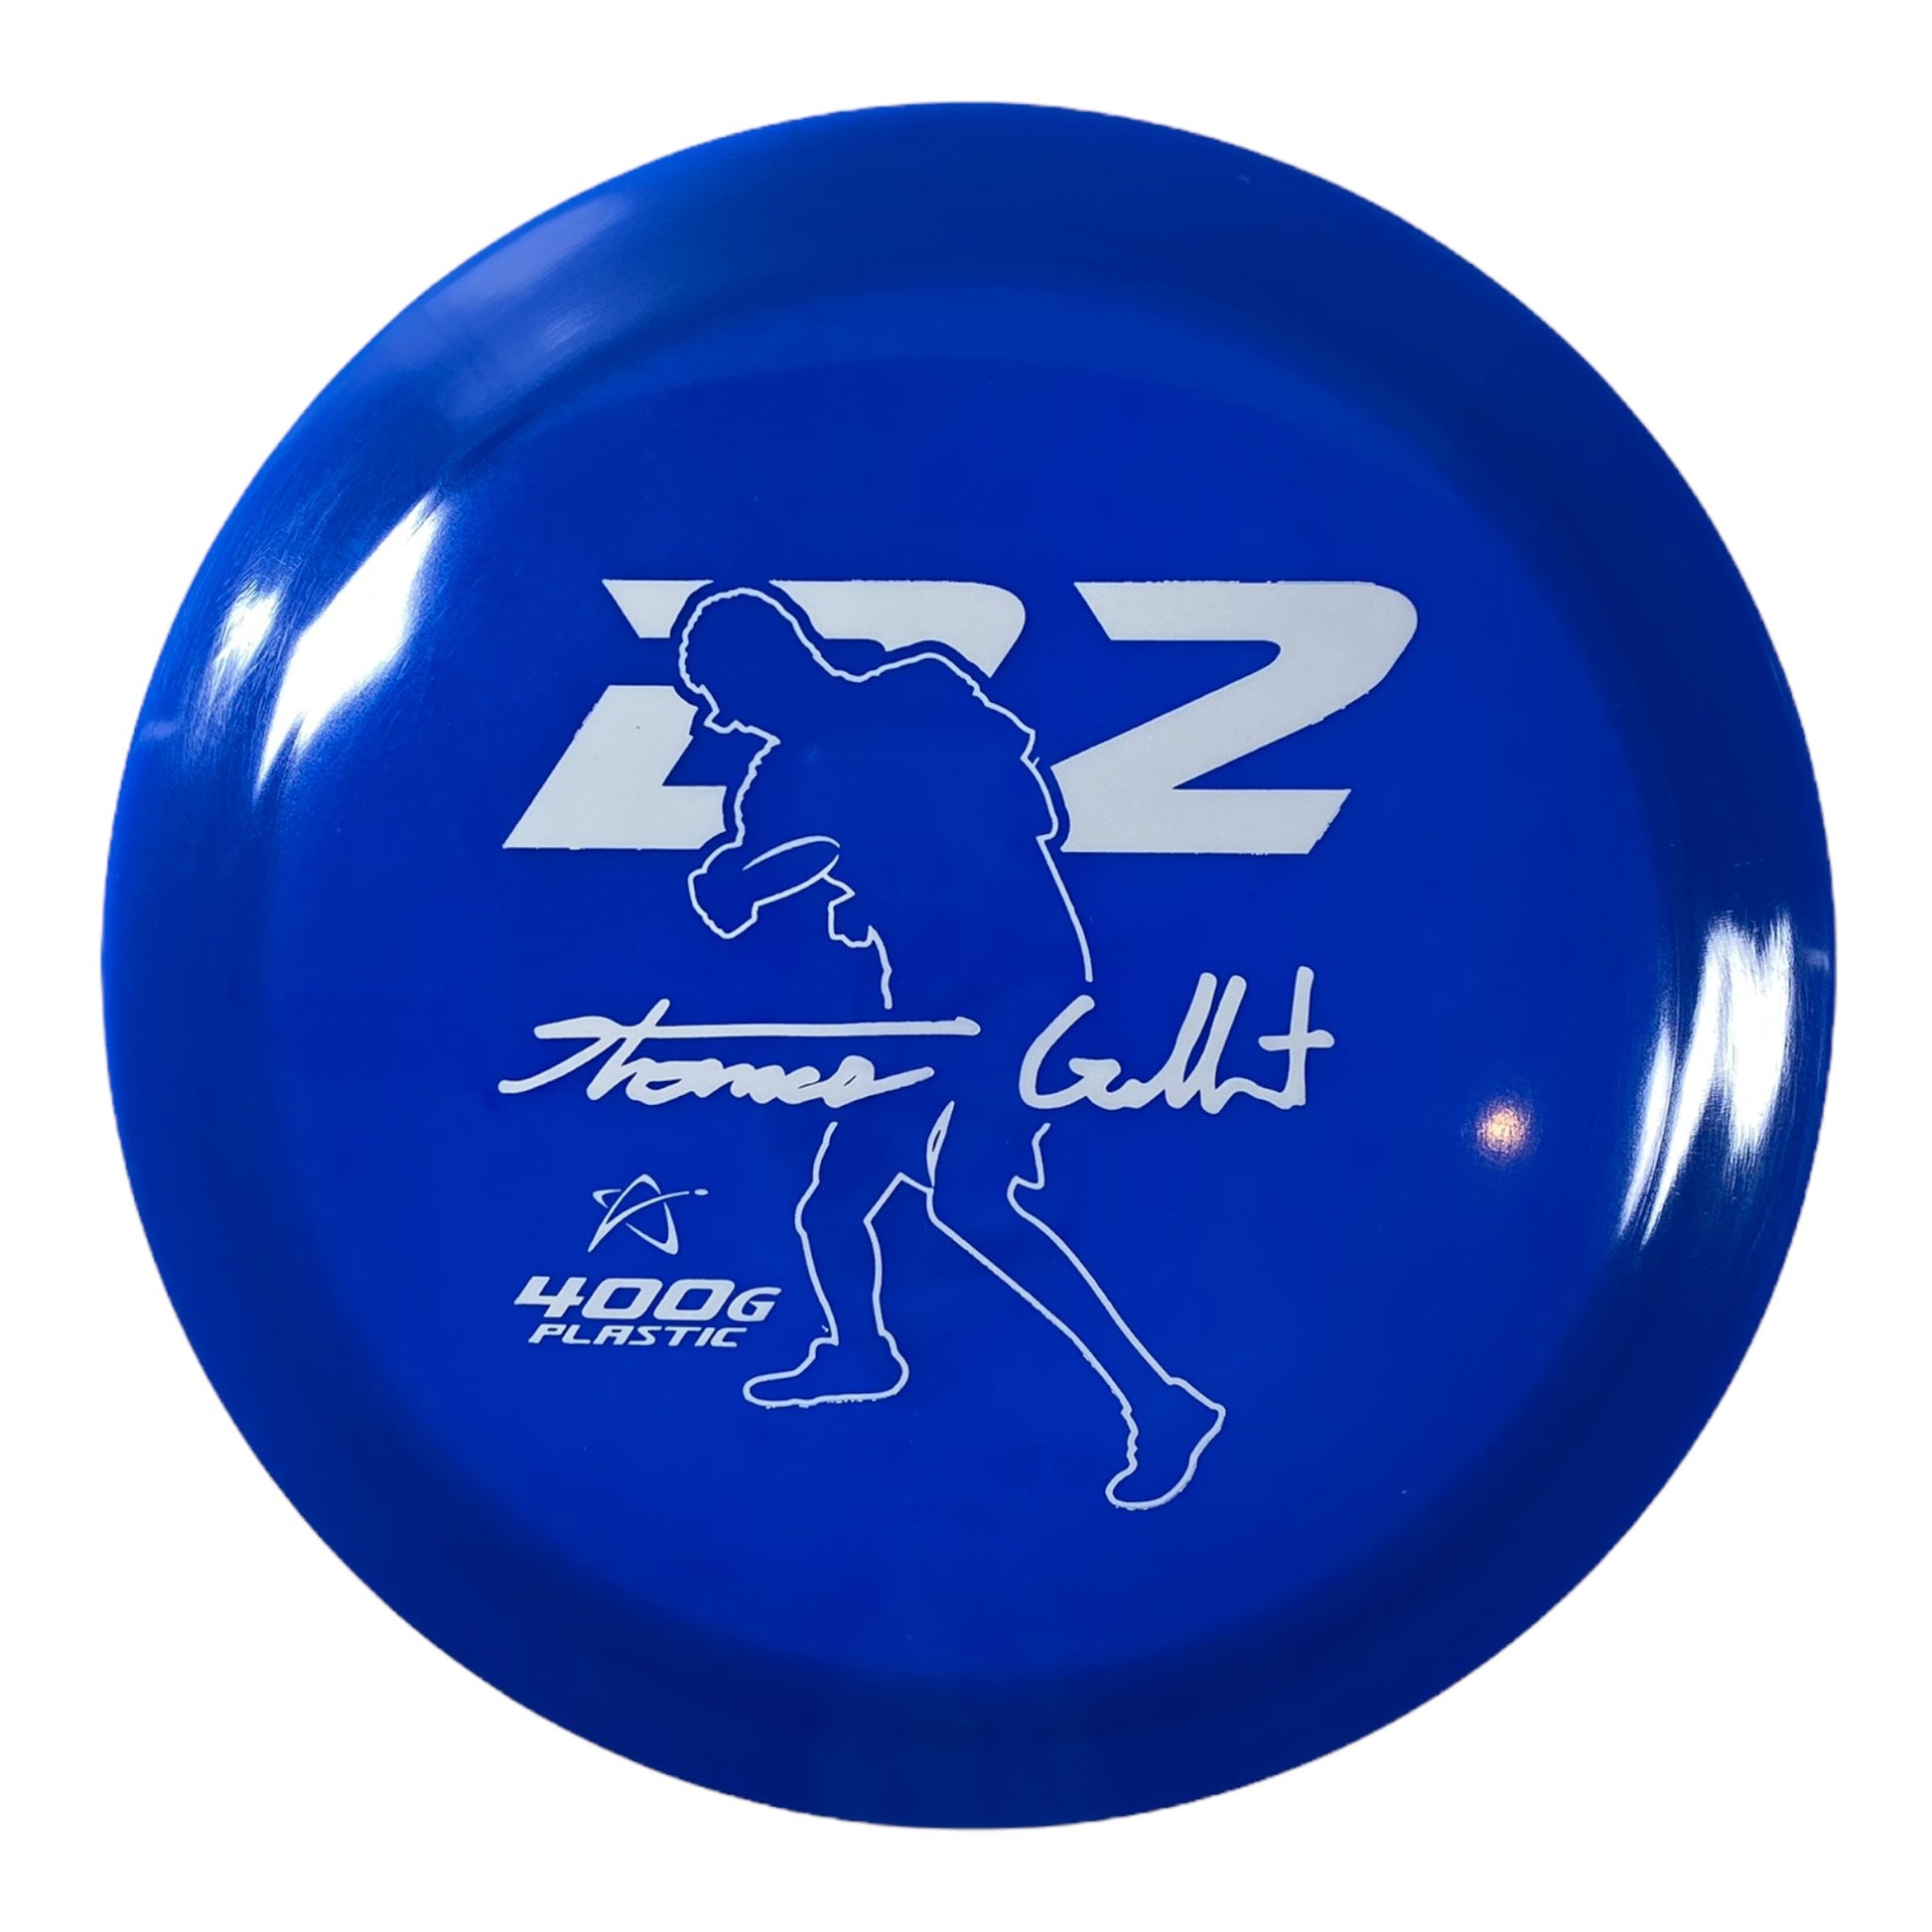 Prodigy Disc D2 | 400G | Blue/White 174g (Thomas Gilbert) Disc Golf